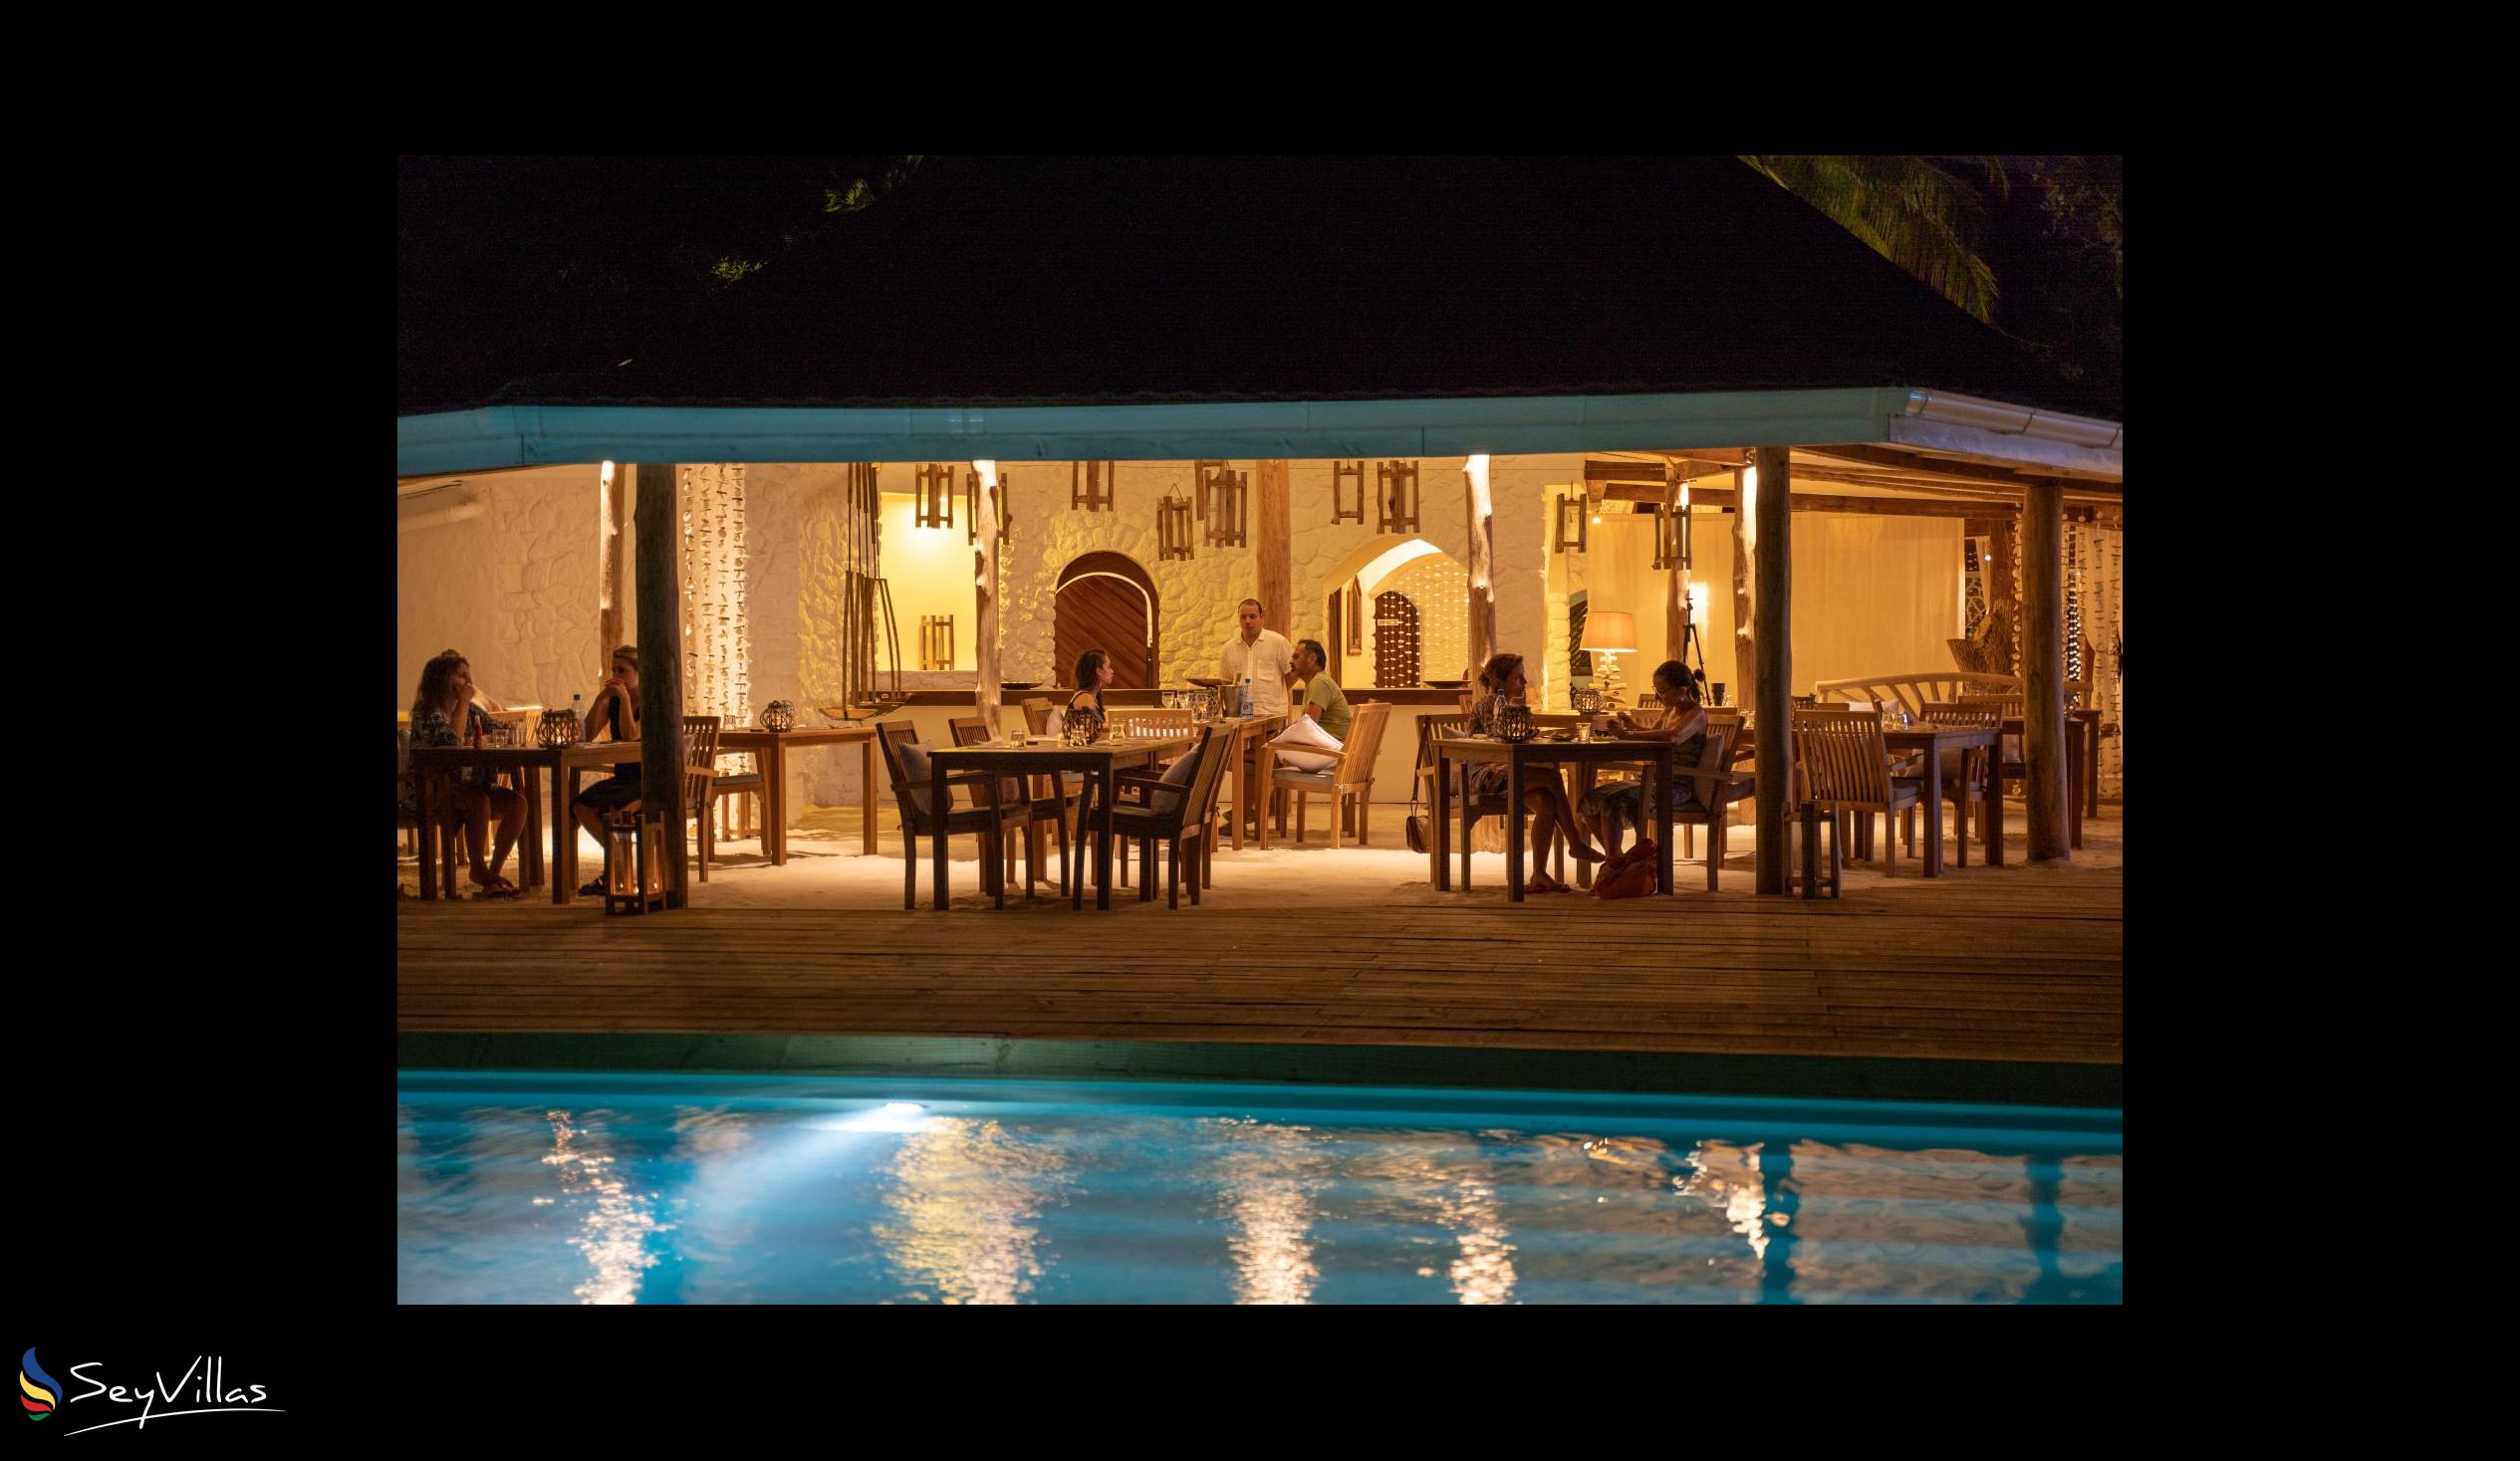 Photo 14: Bliss Hotel Praslin - Outdoor area - Praslin (Seychelles)